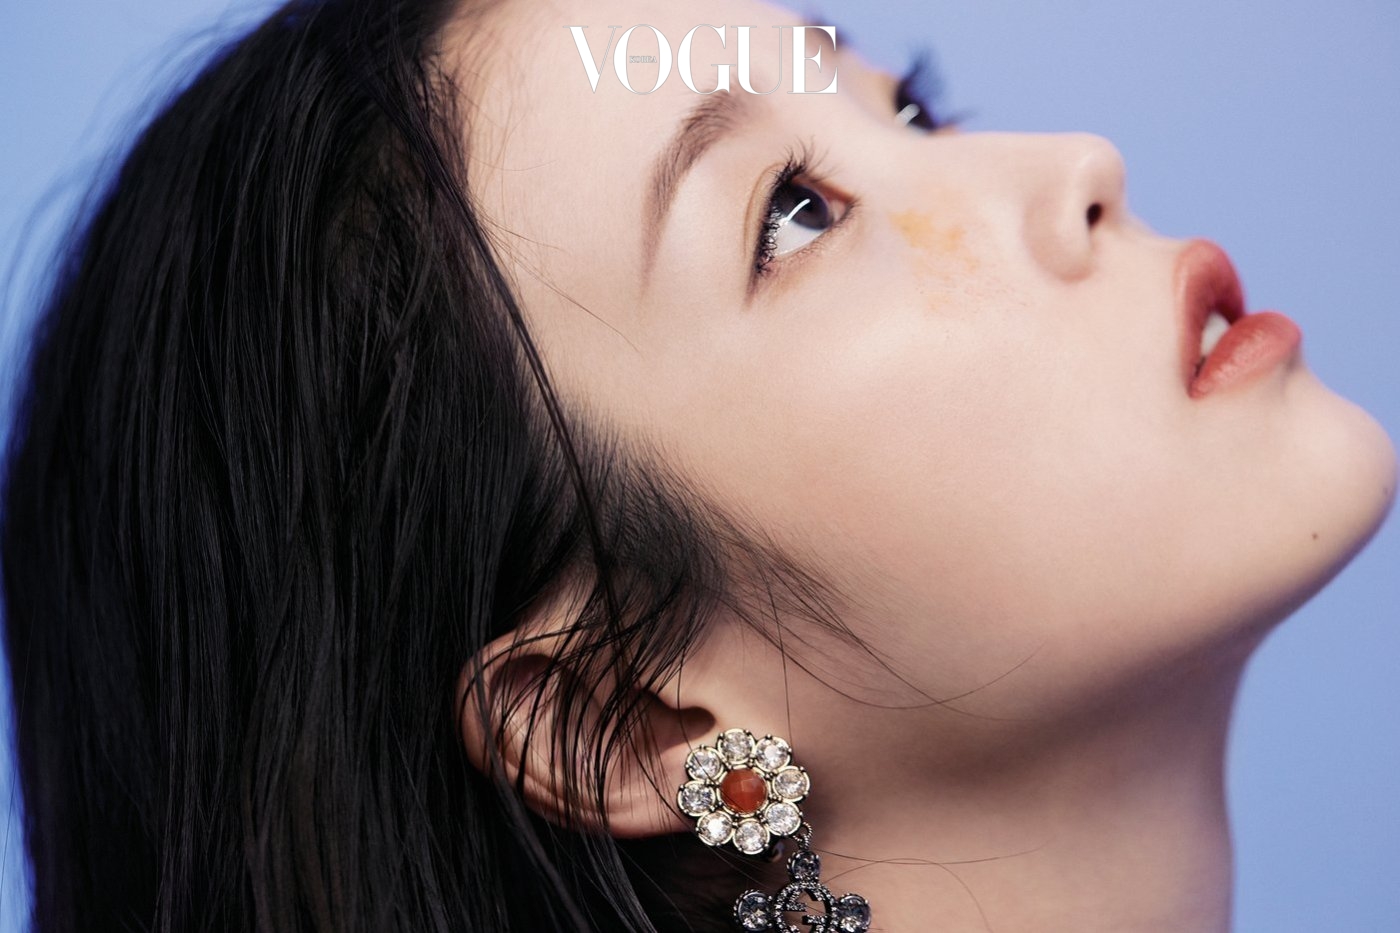 IU Face Vogue Magazine Closeup Asian Korean Women K Pop 1400x933